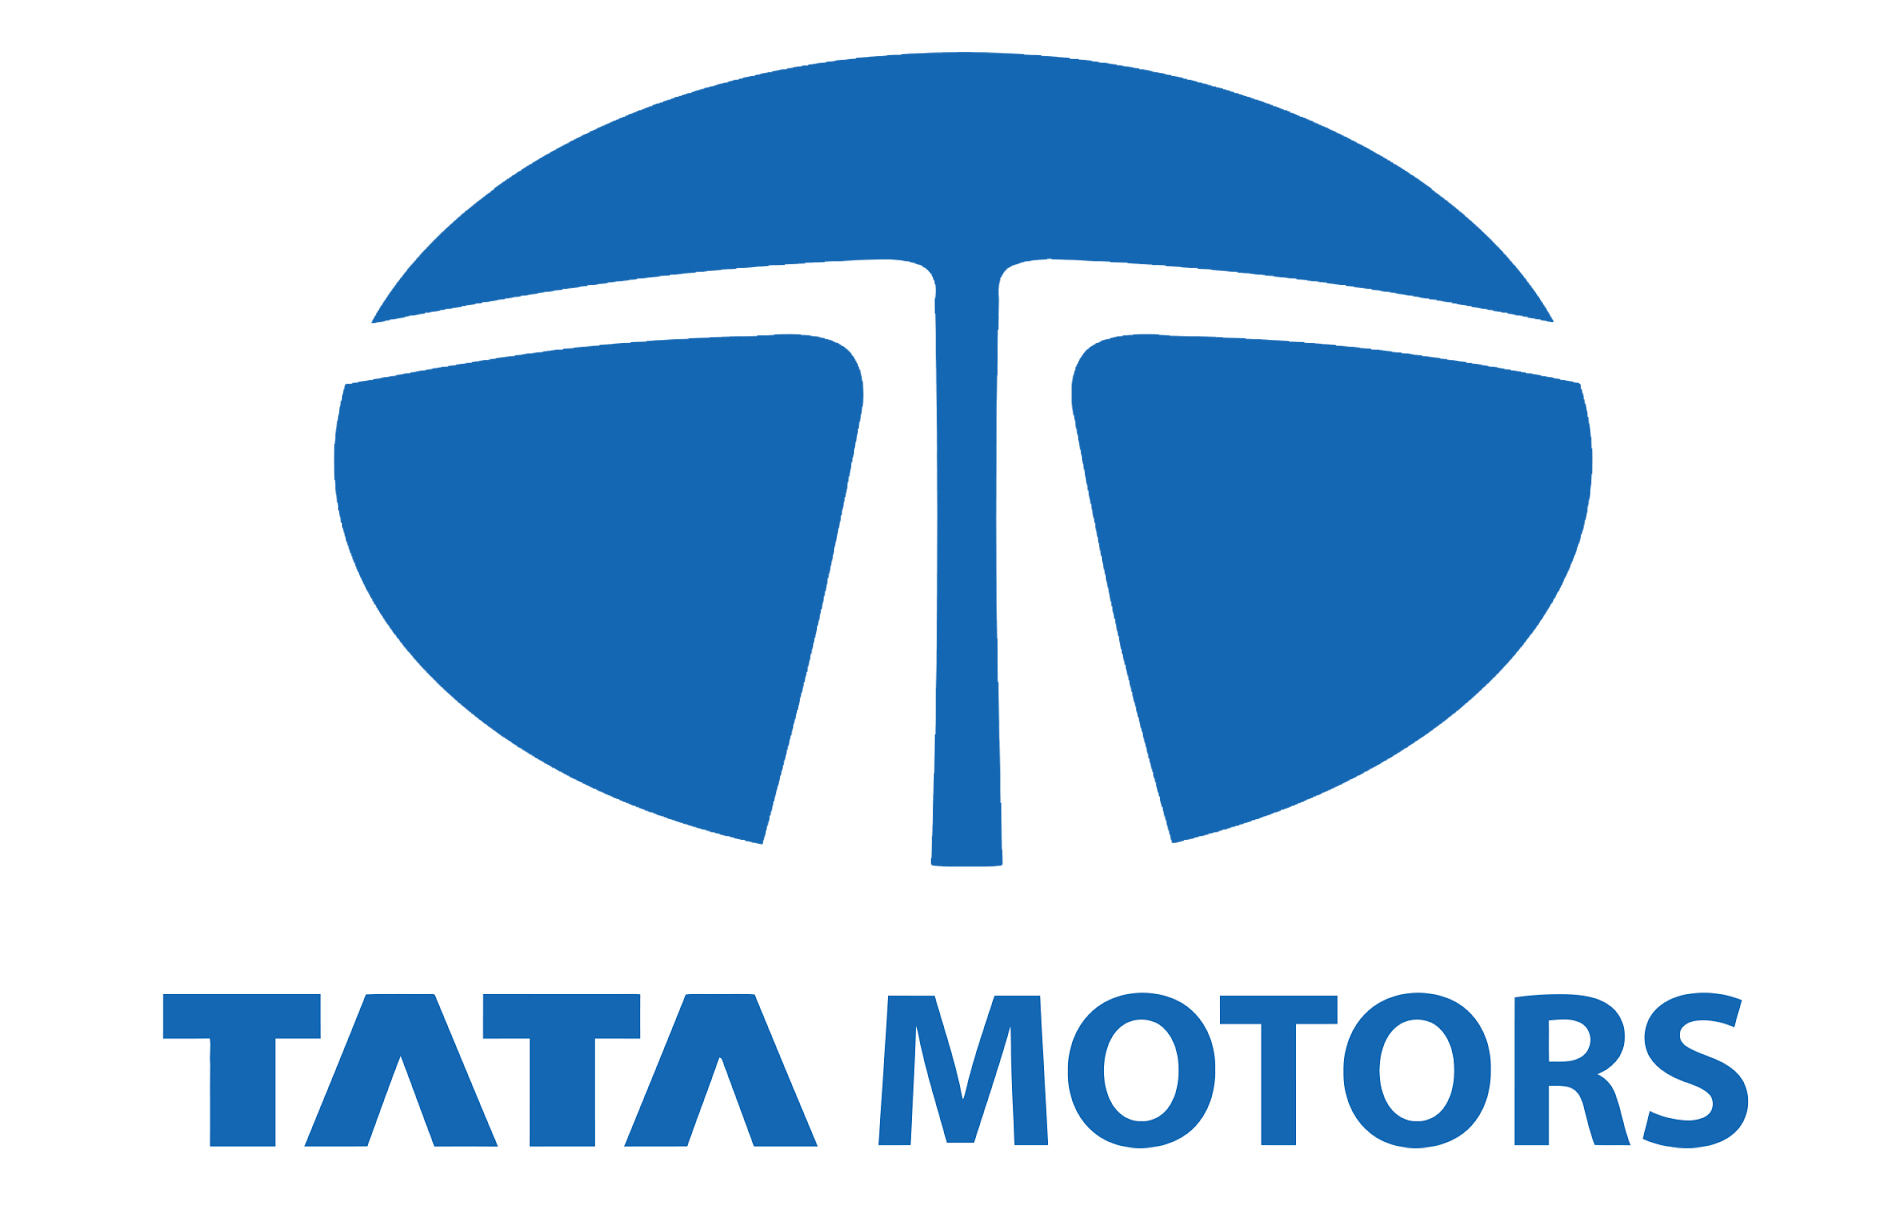 Tata Motors Cars Showroom - Fairdeal Motors Logo